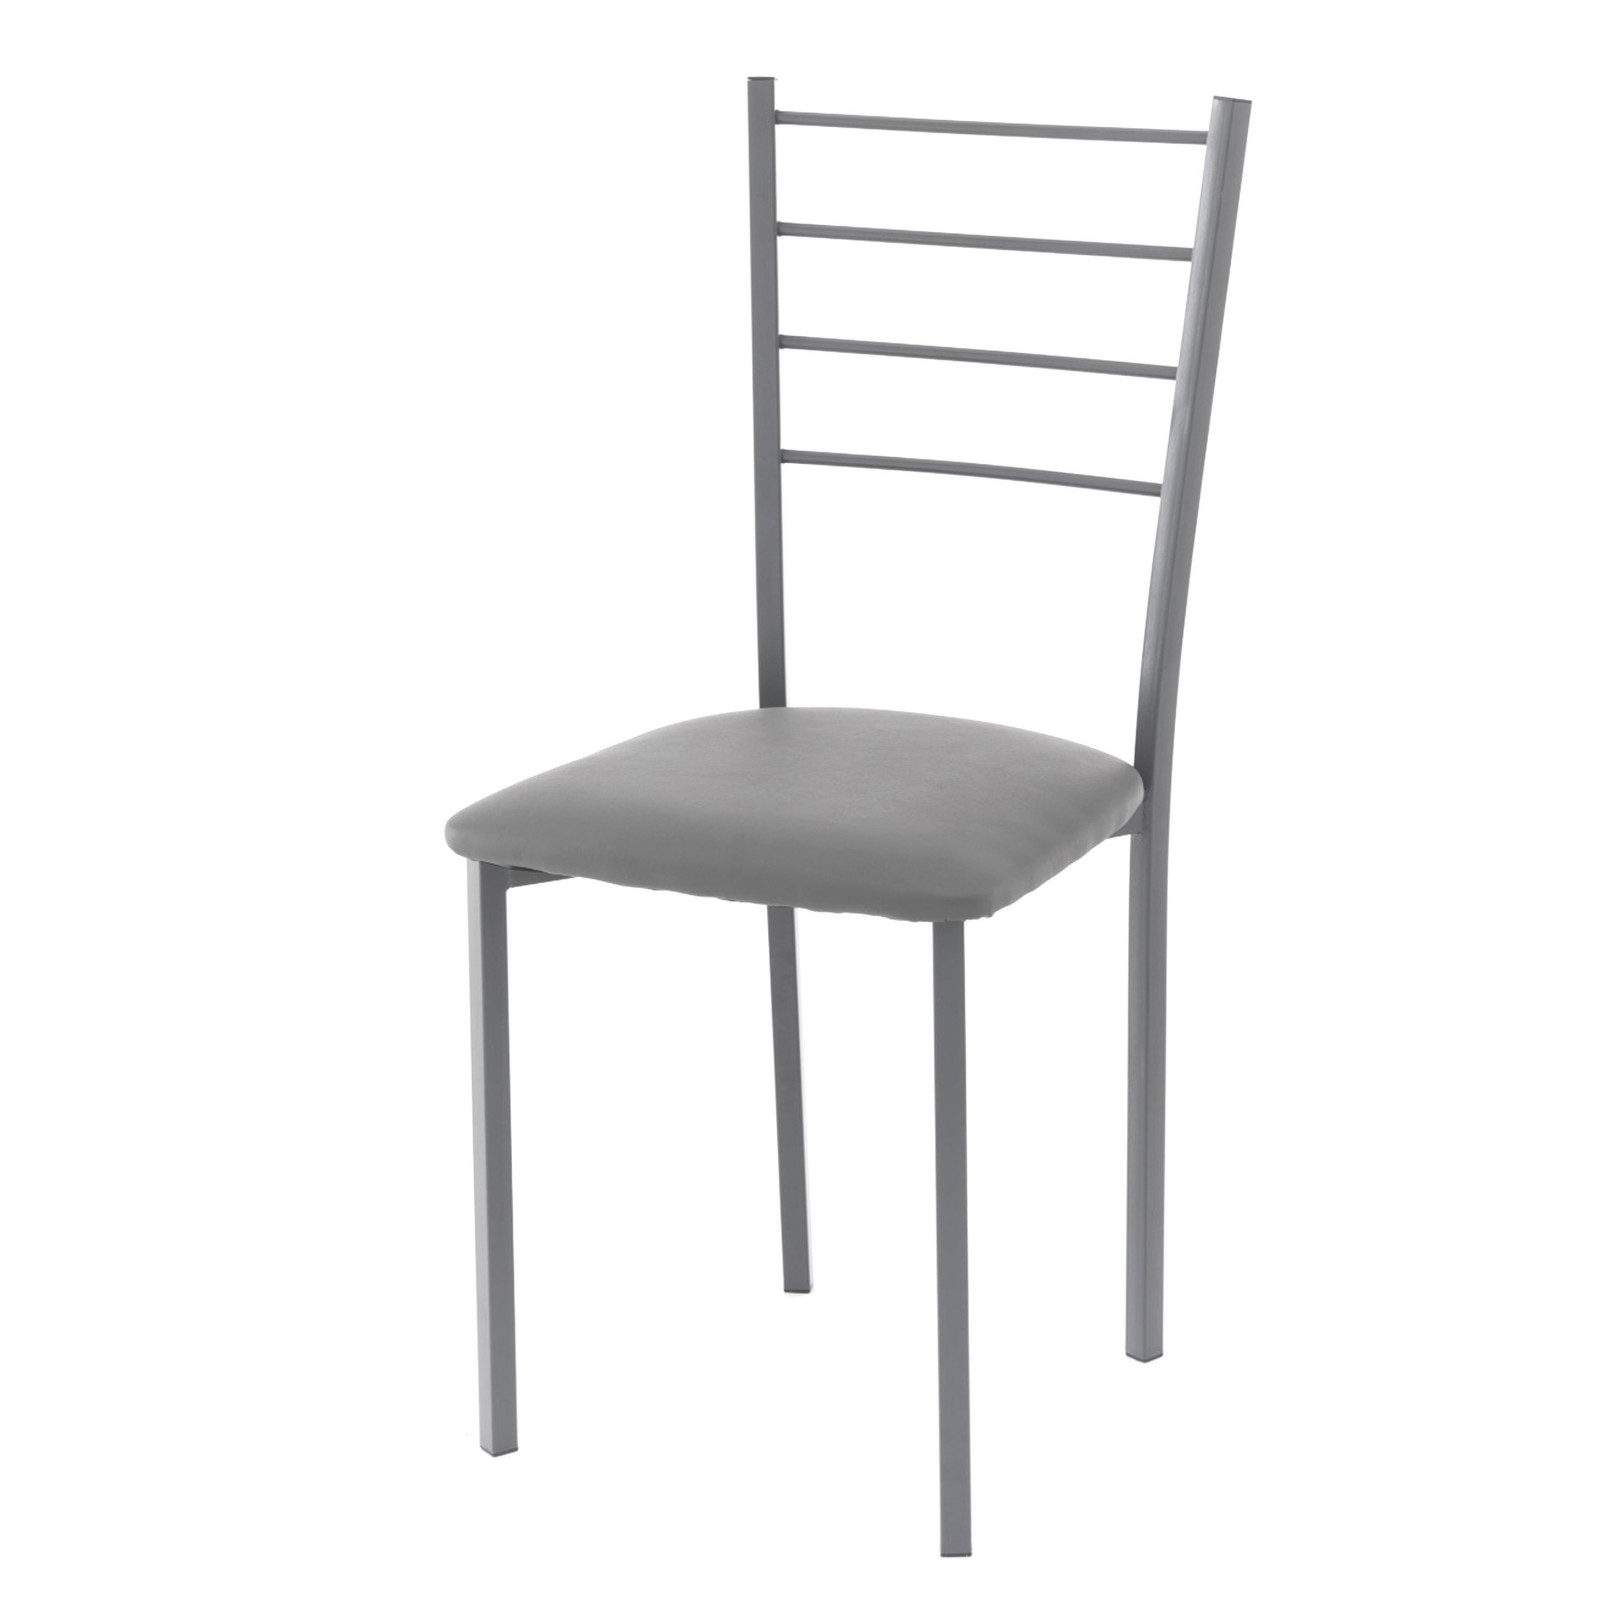 Sedia Allison Grey in metallo con seduta imbottita e rivestita in pelle sintetica Grigia, 40x40xh88 cm